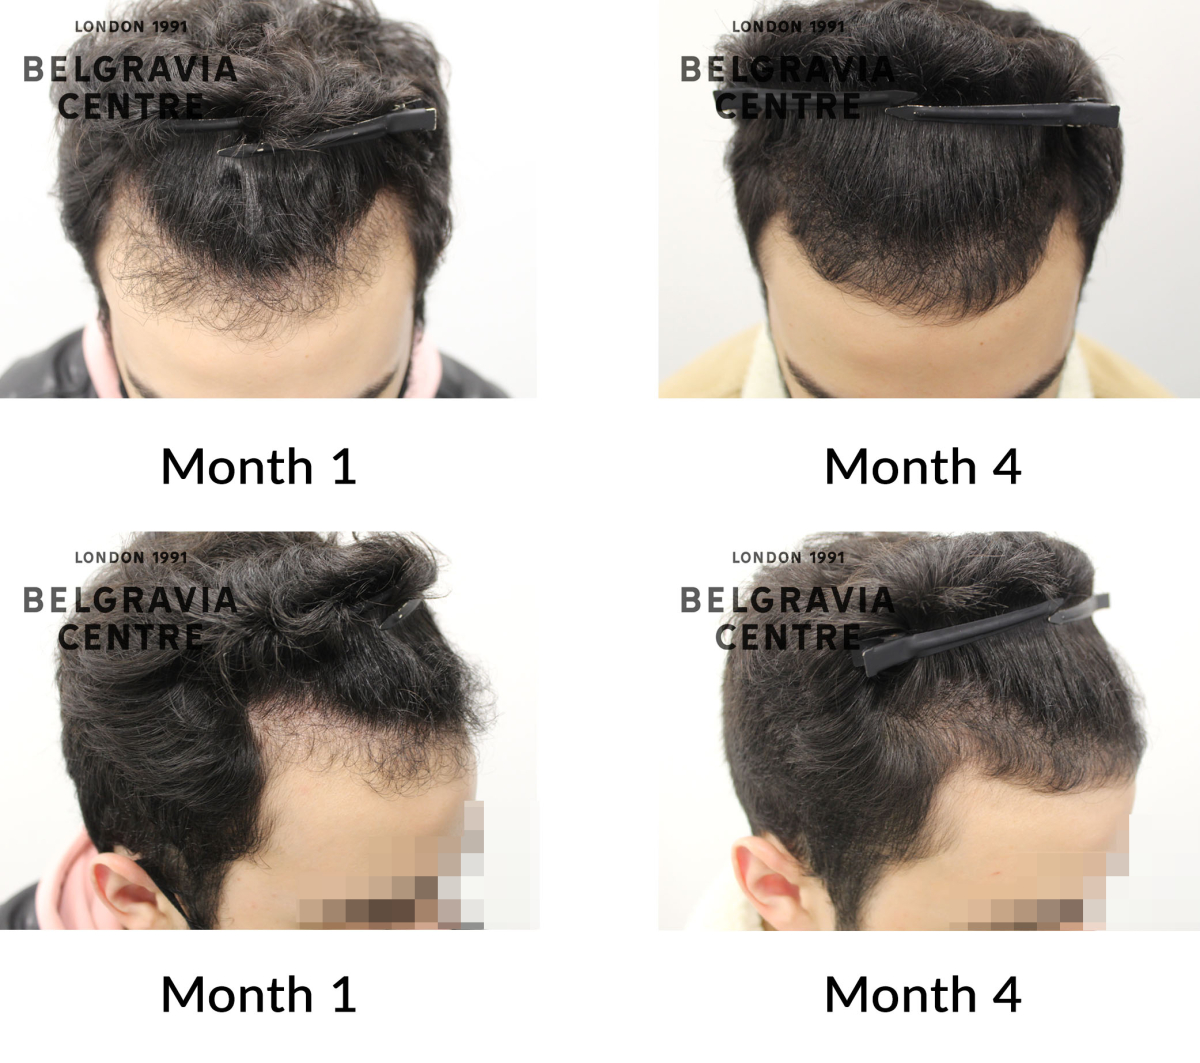 male pattern hair loss the belgravia centre 426629